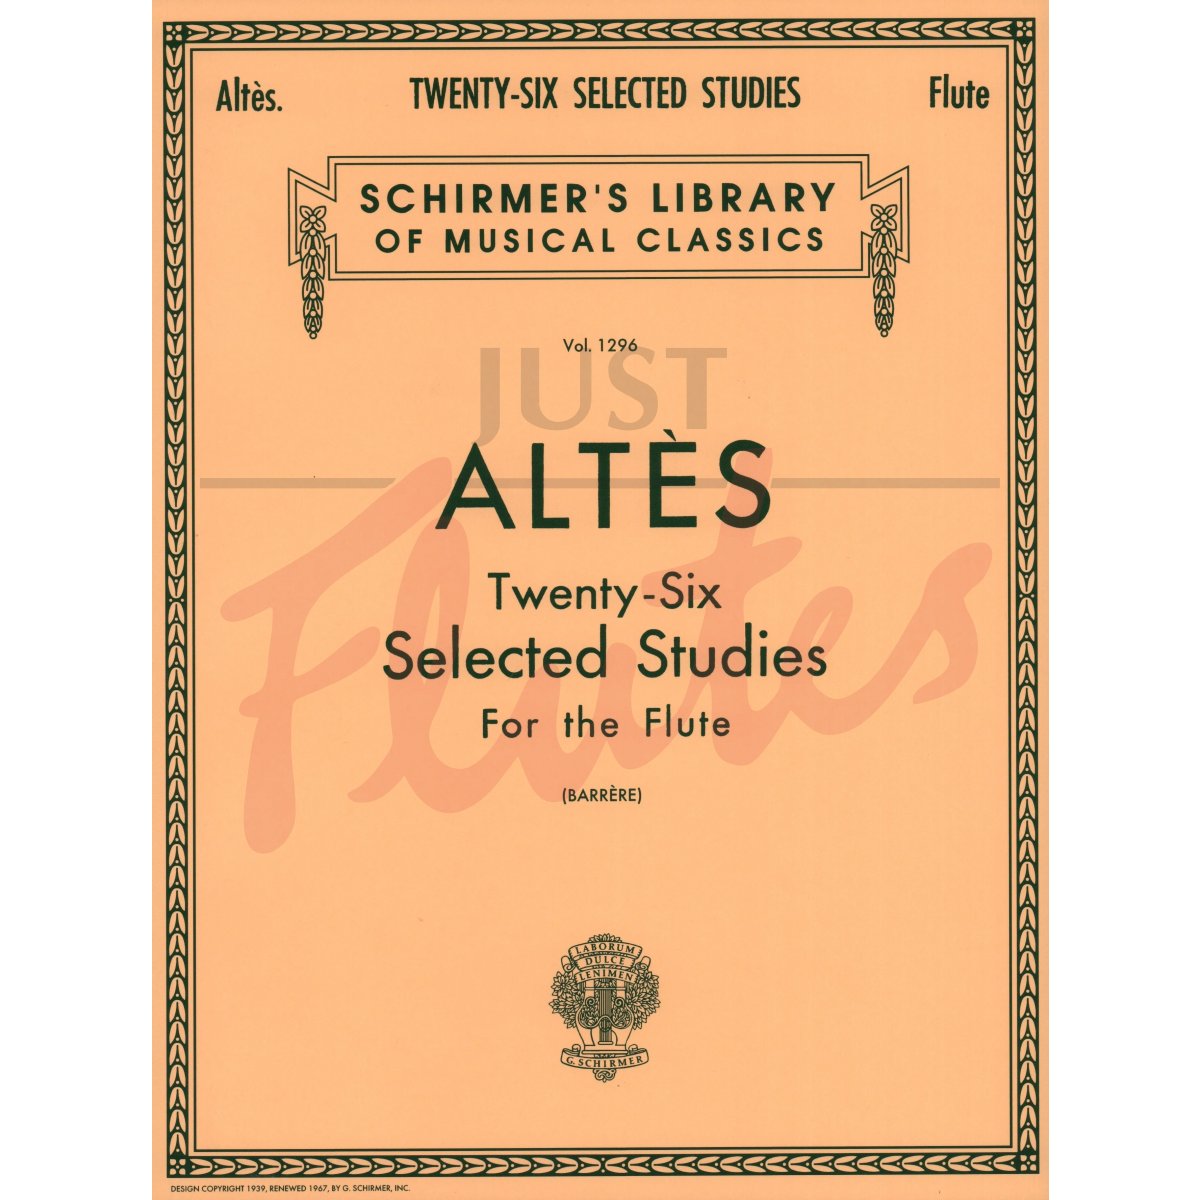 Twenty-Six Selected Studies for Flute